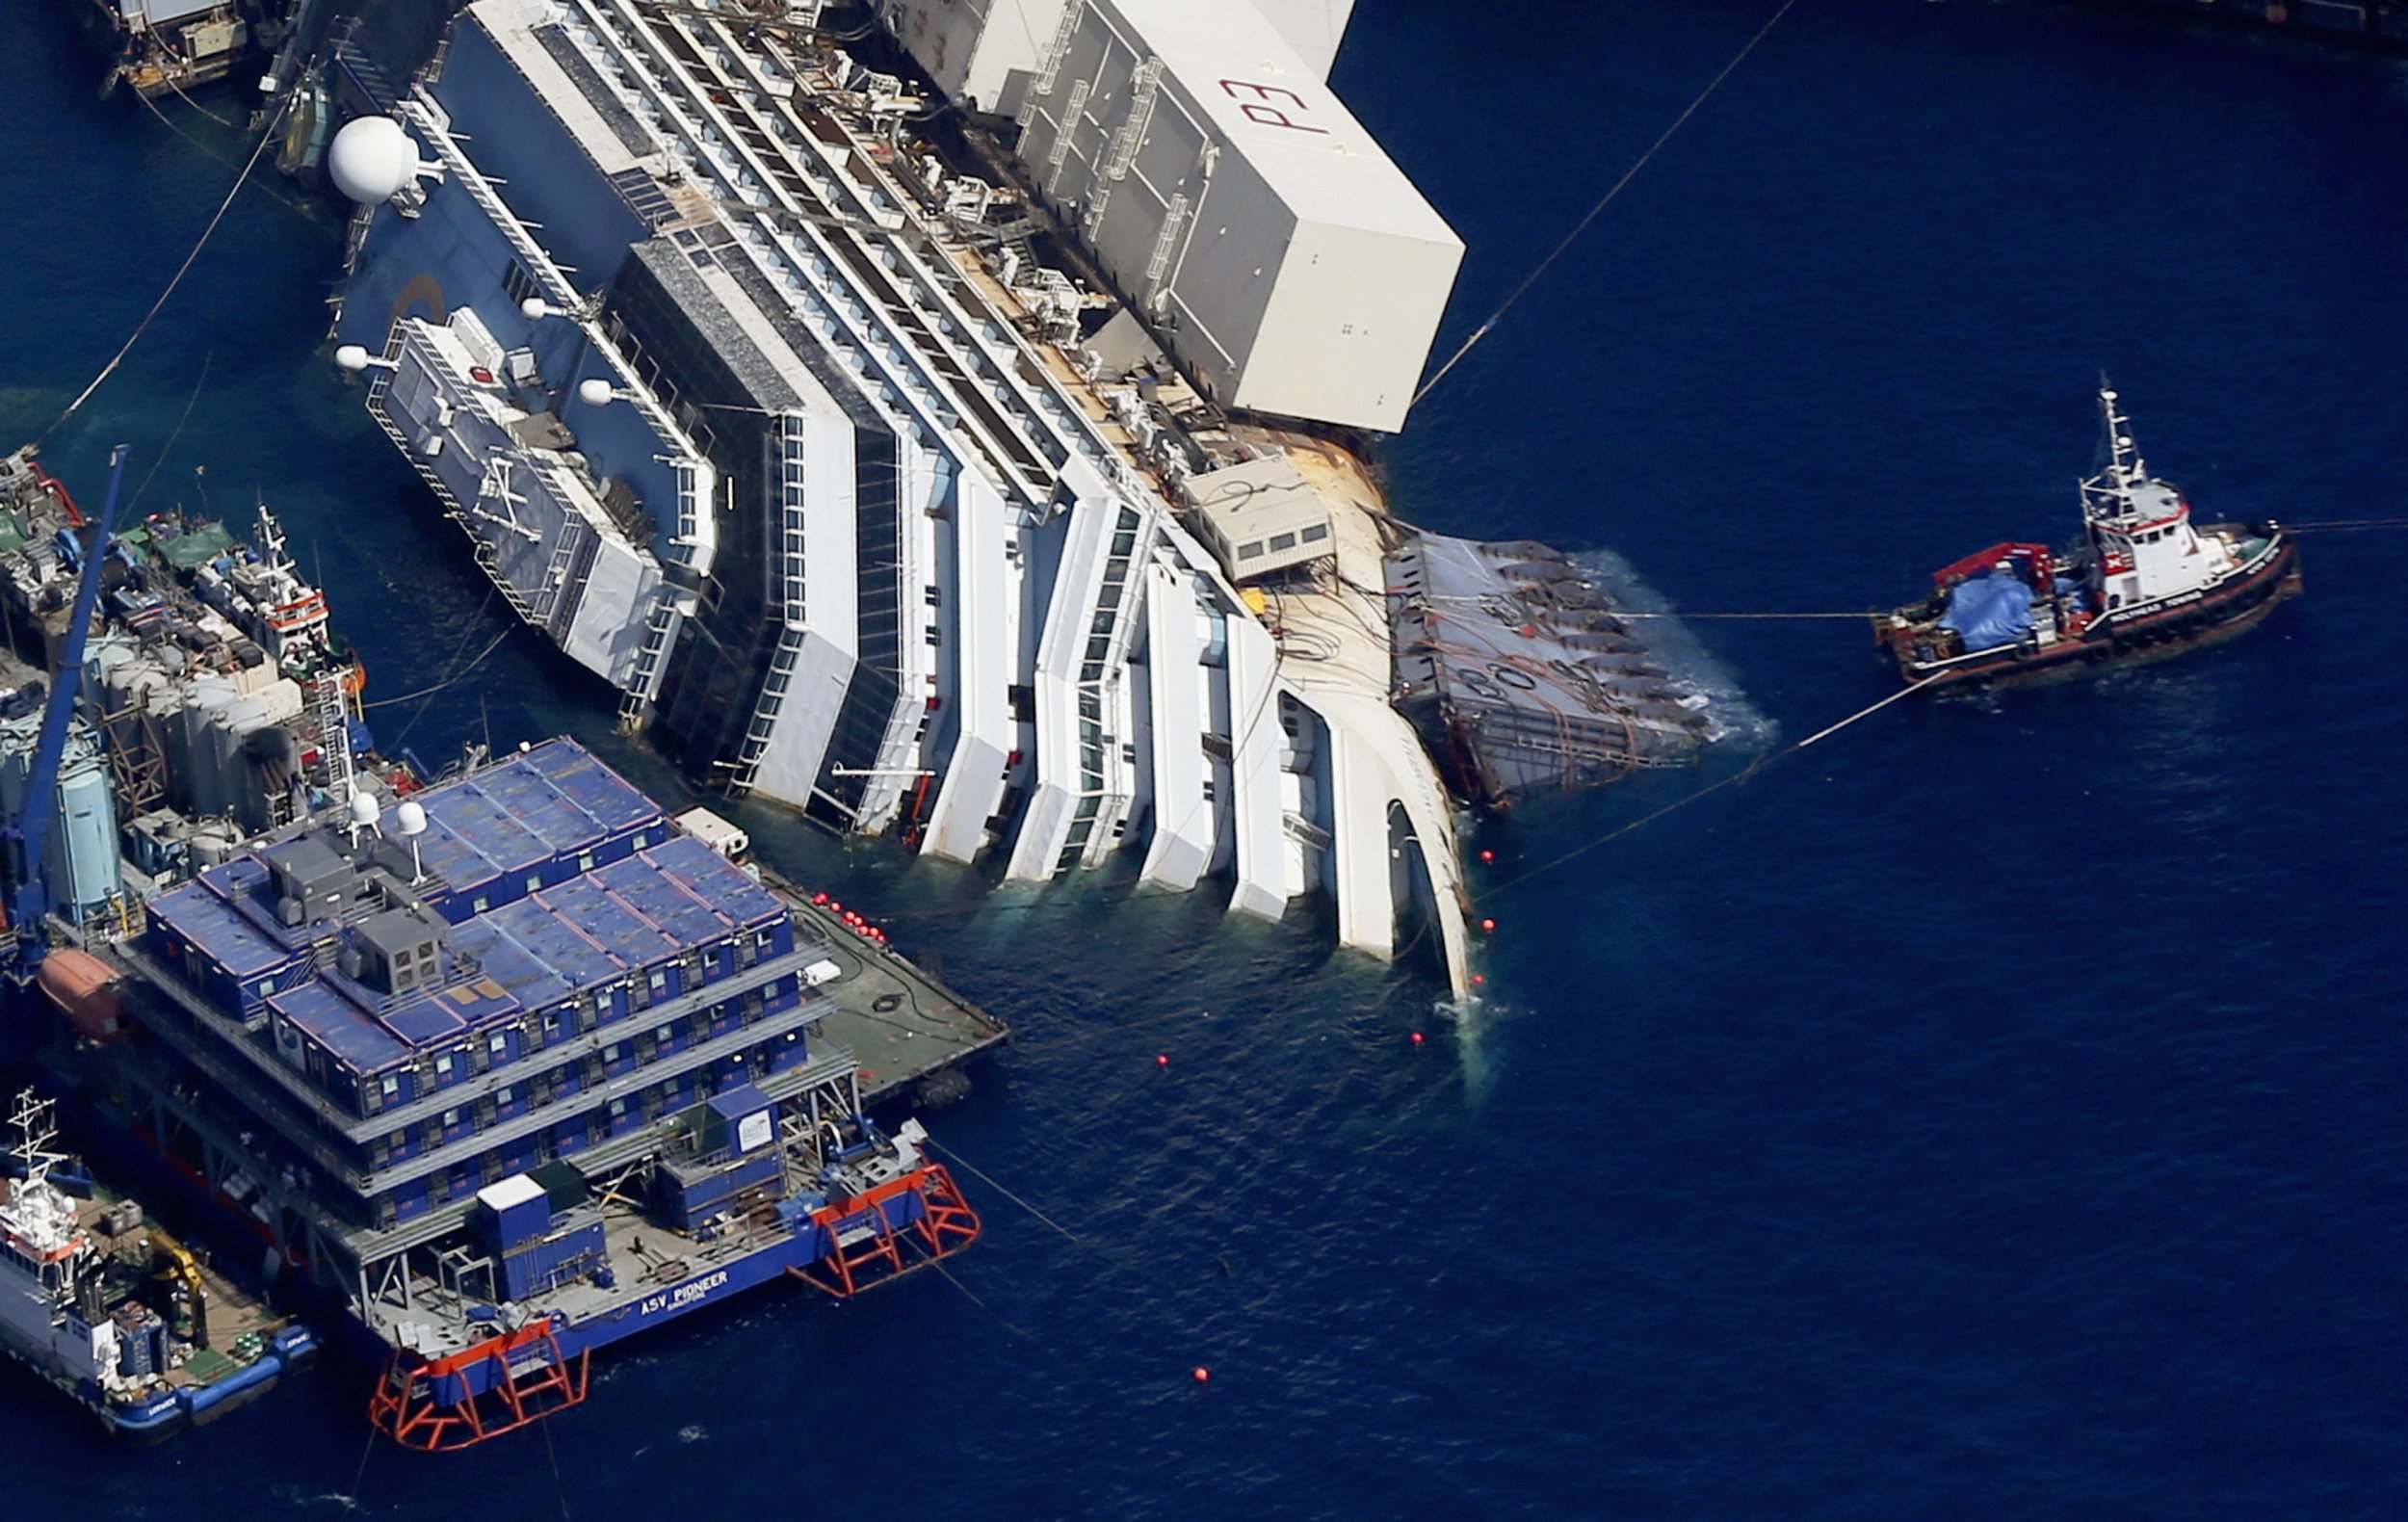 Costa Concordia Salvage Operation - A Slideshow